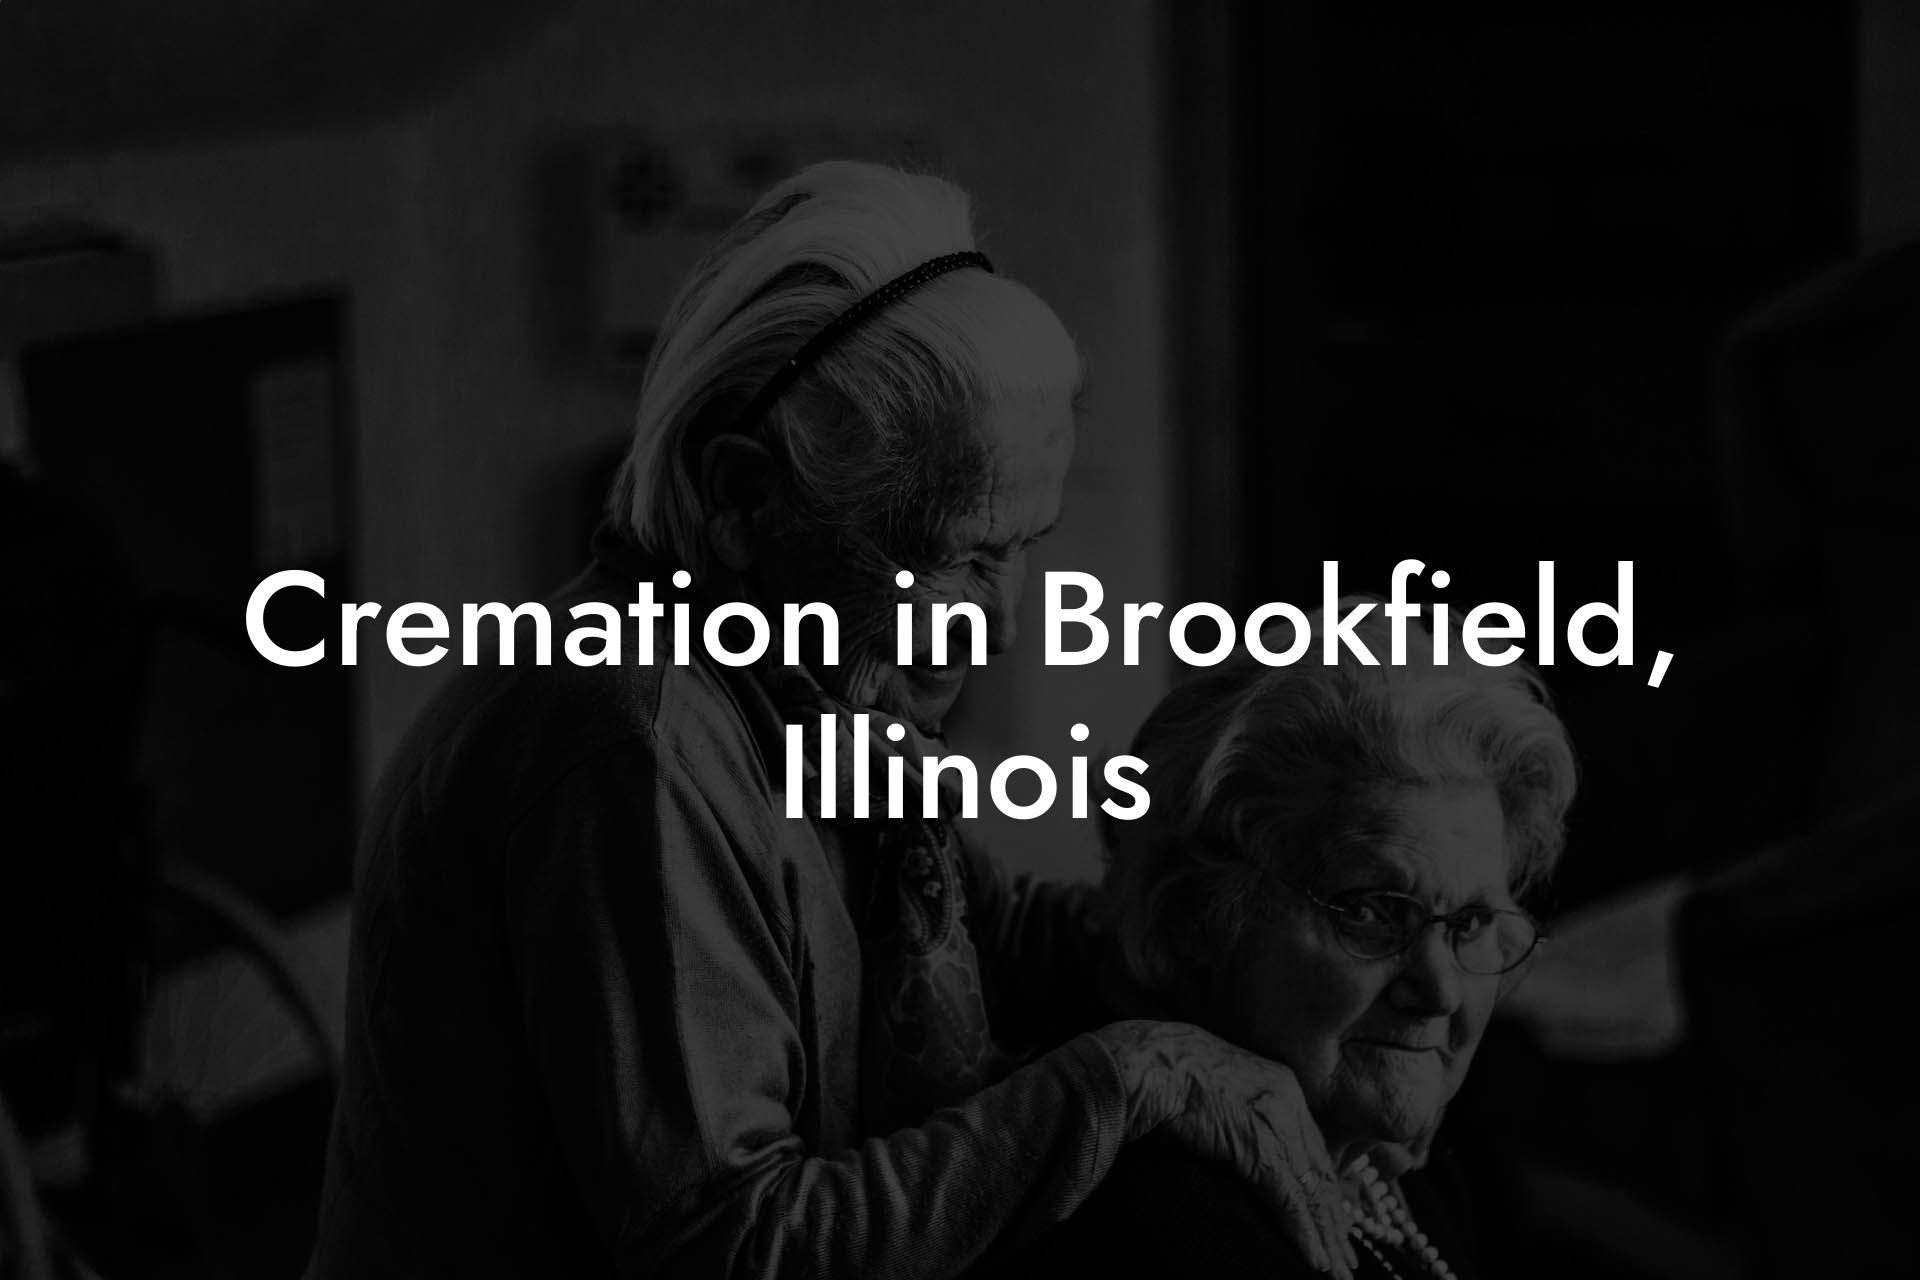 Cremation in Brookfield, Illinois